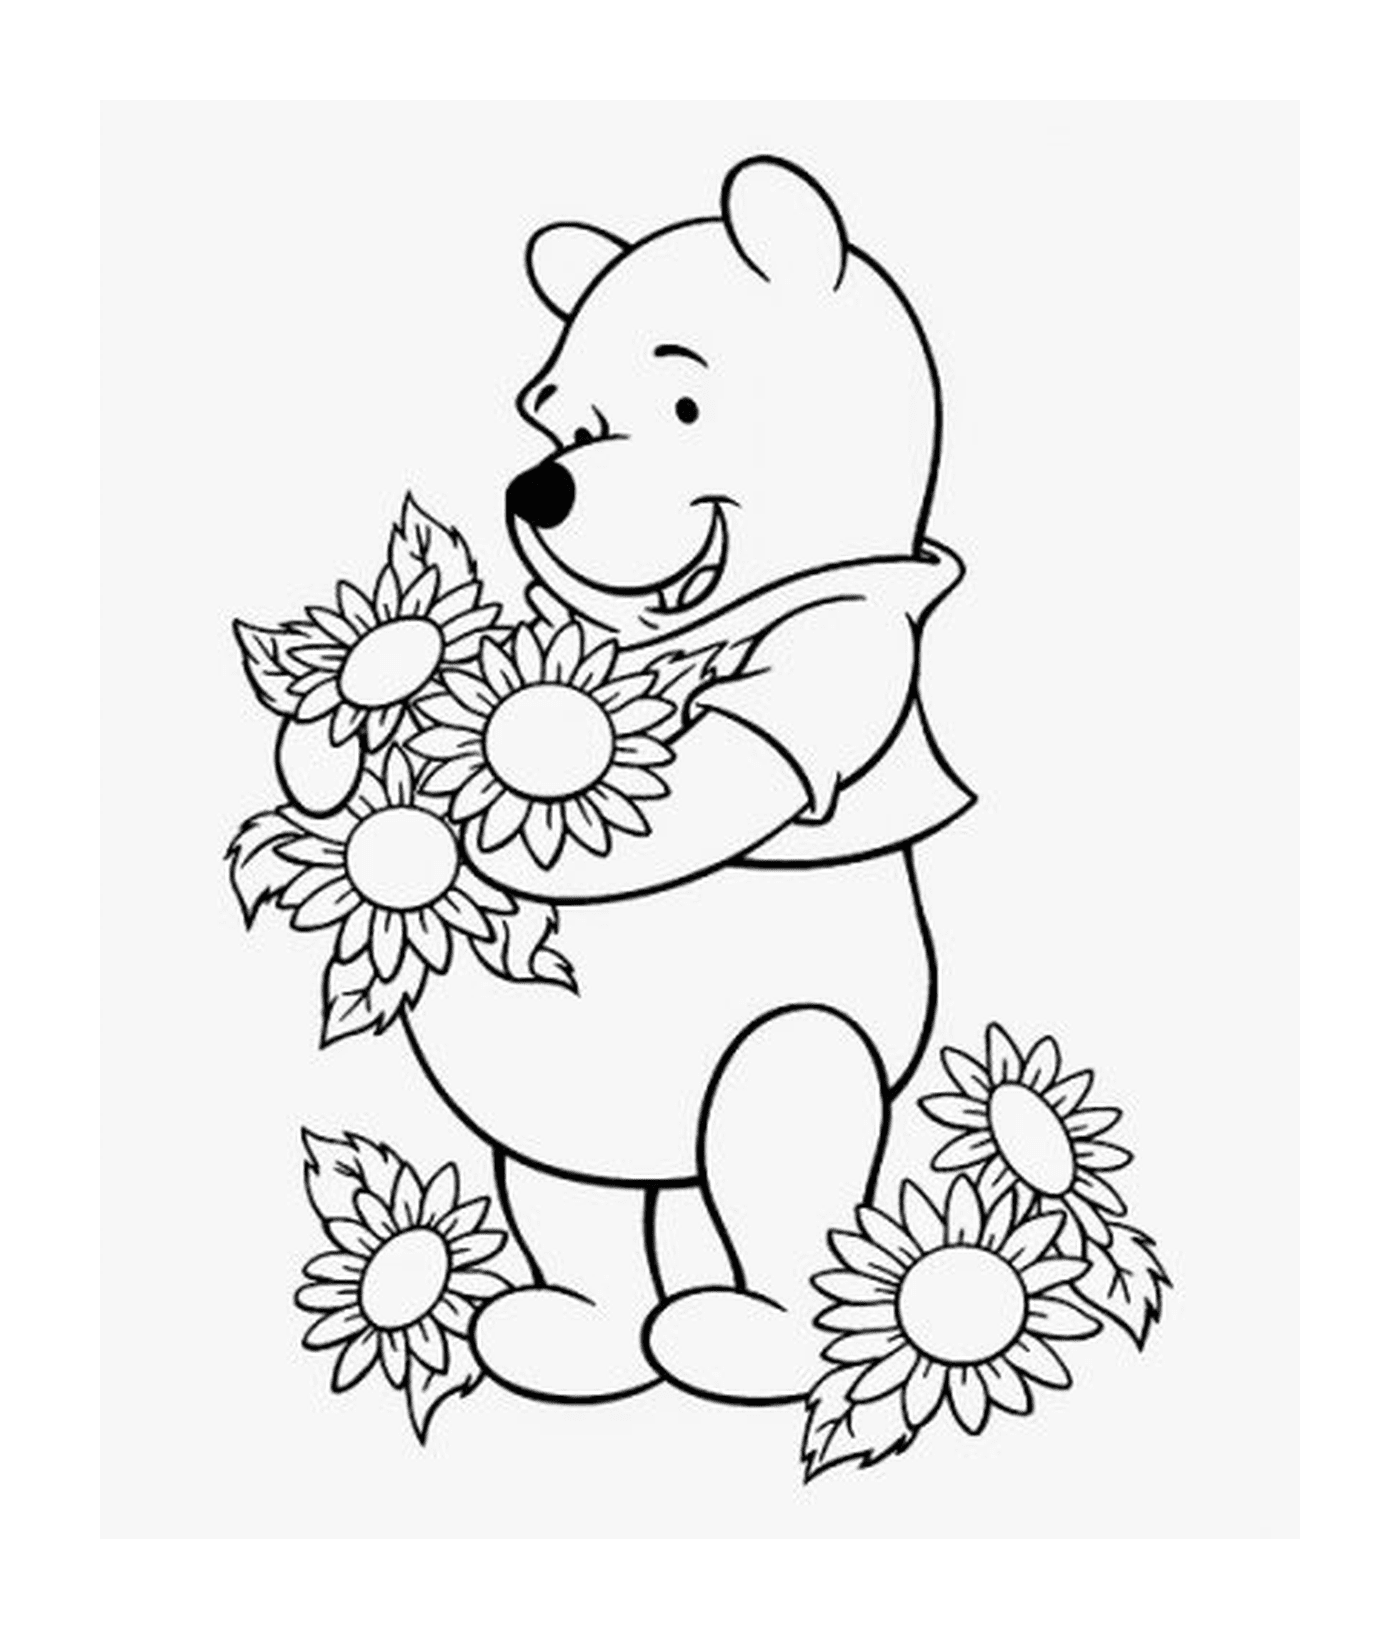   Winnie l'ourson aime les fleurs 